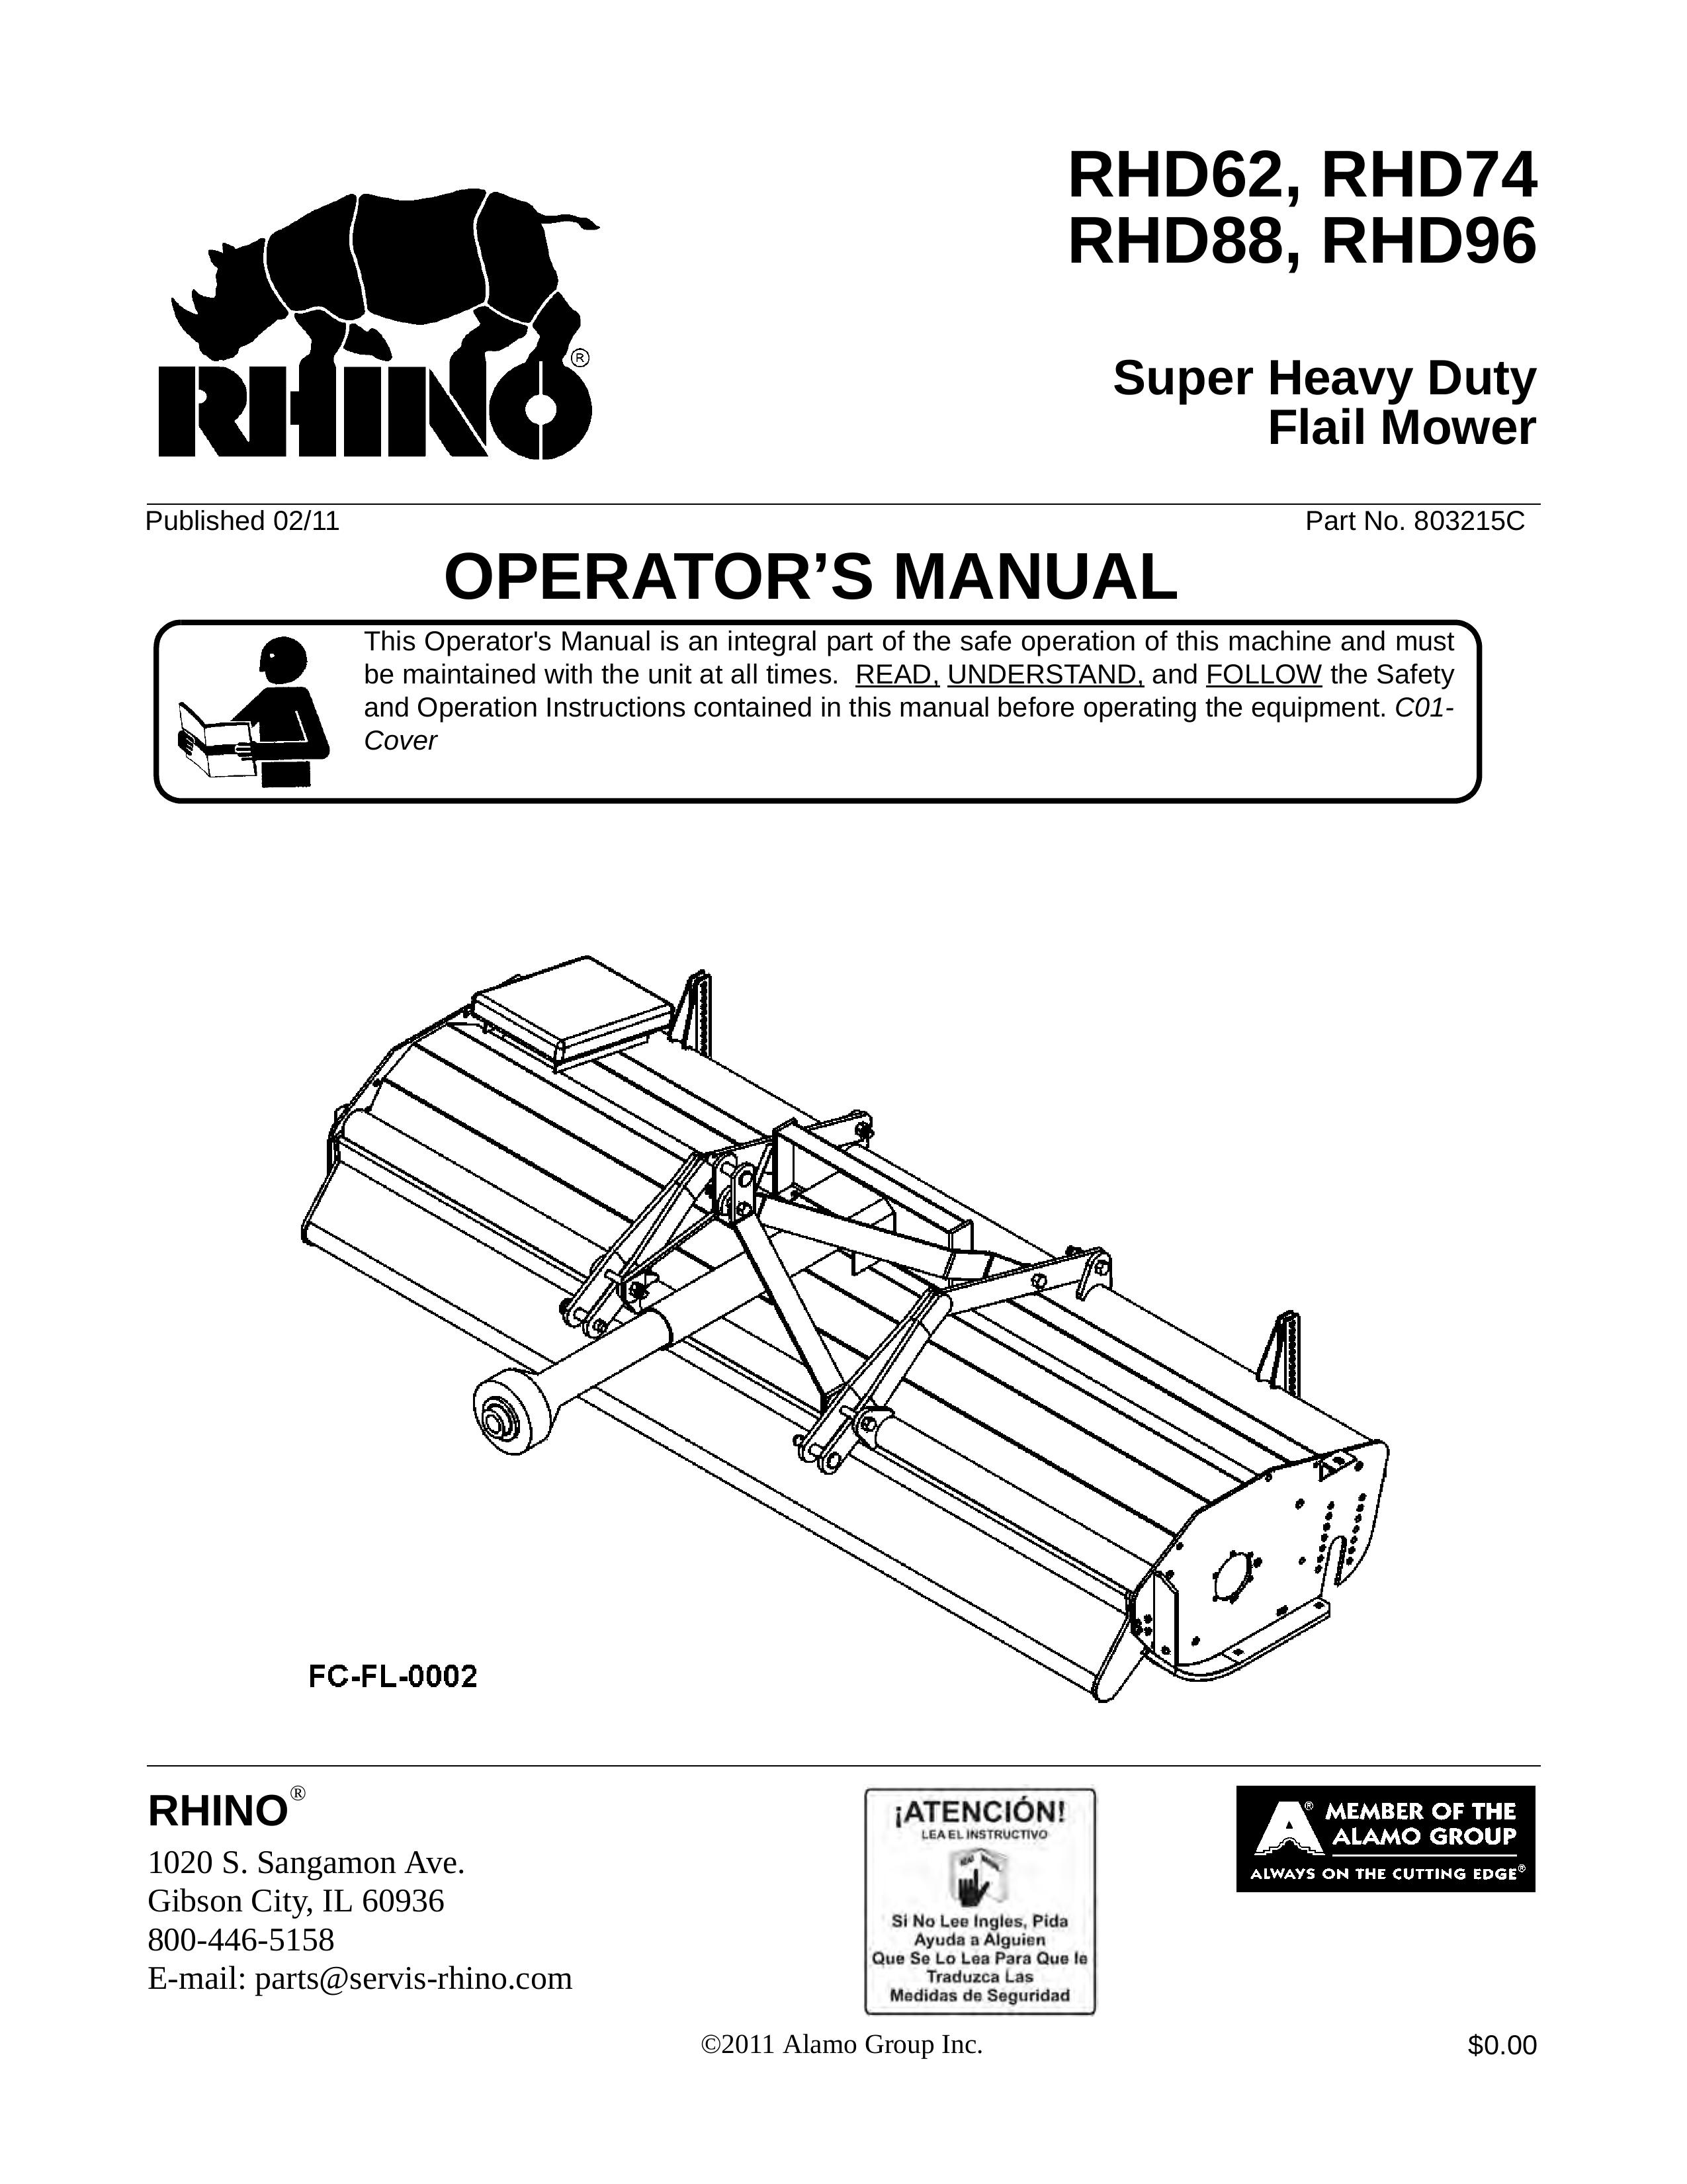 Rhino Mounts RHD96 Lawn Mower User Manual